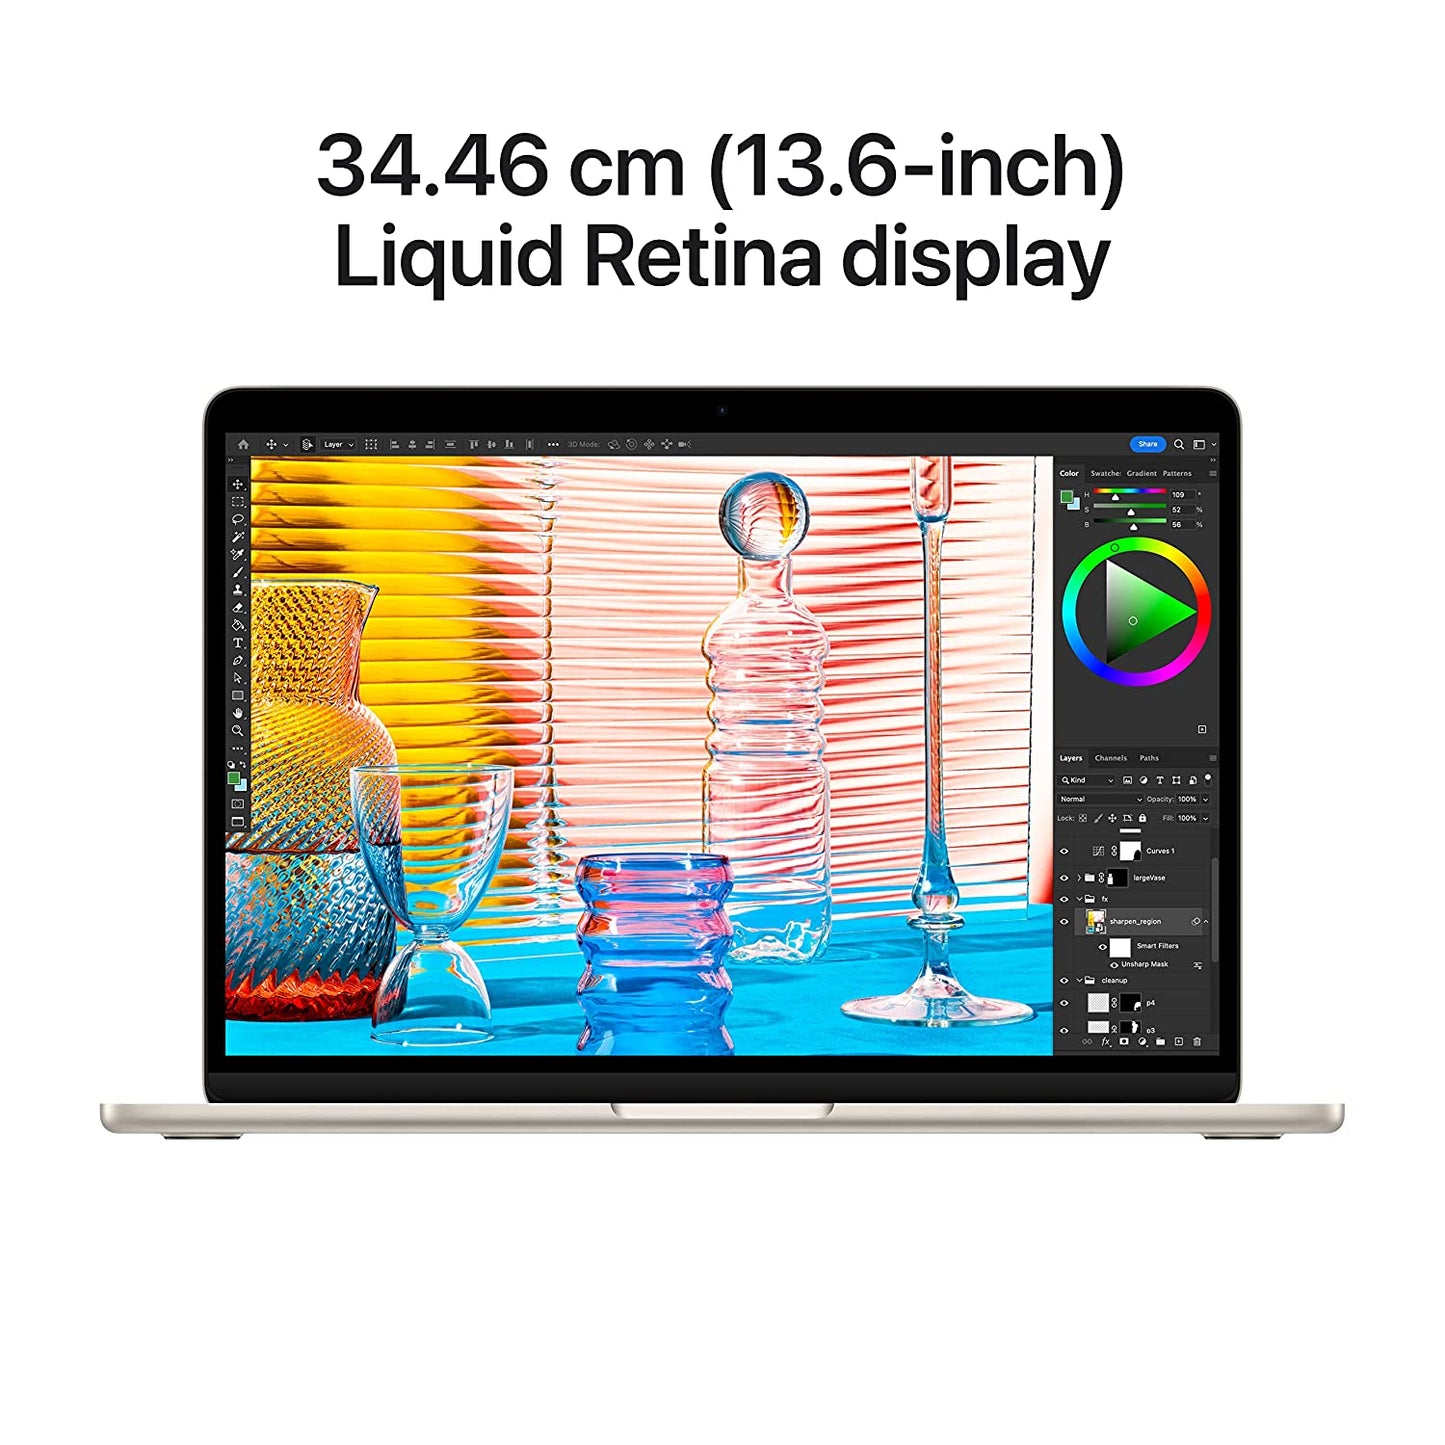 2022 Apple MacBook Air Laptop with M2 chip: 34.46 cm (13.6-inch) Liquid Retina Display, 8GB RAM, 256GB SSD Storage, 1080p FaceTime HD Camera. Starlight